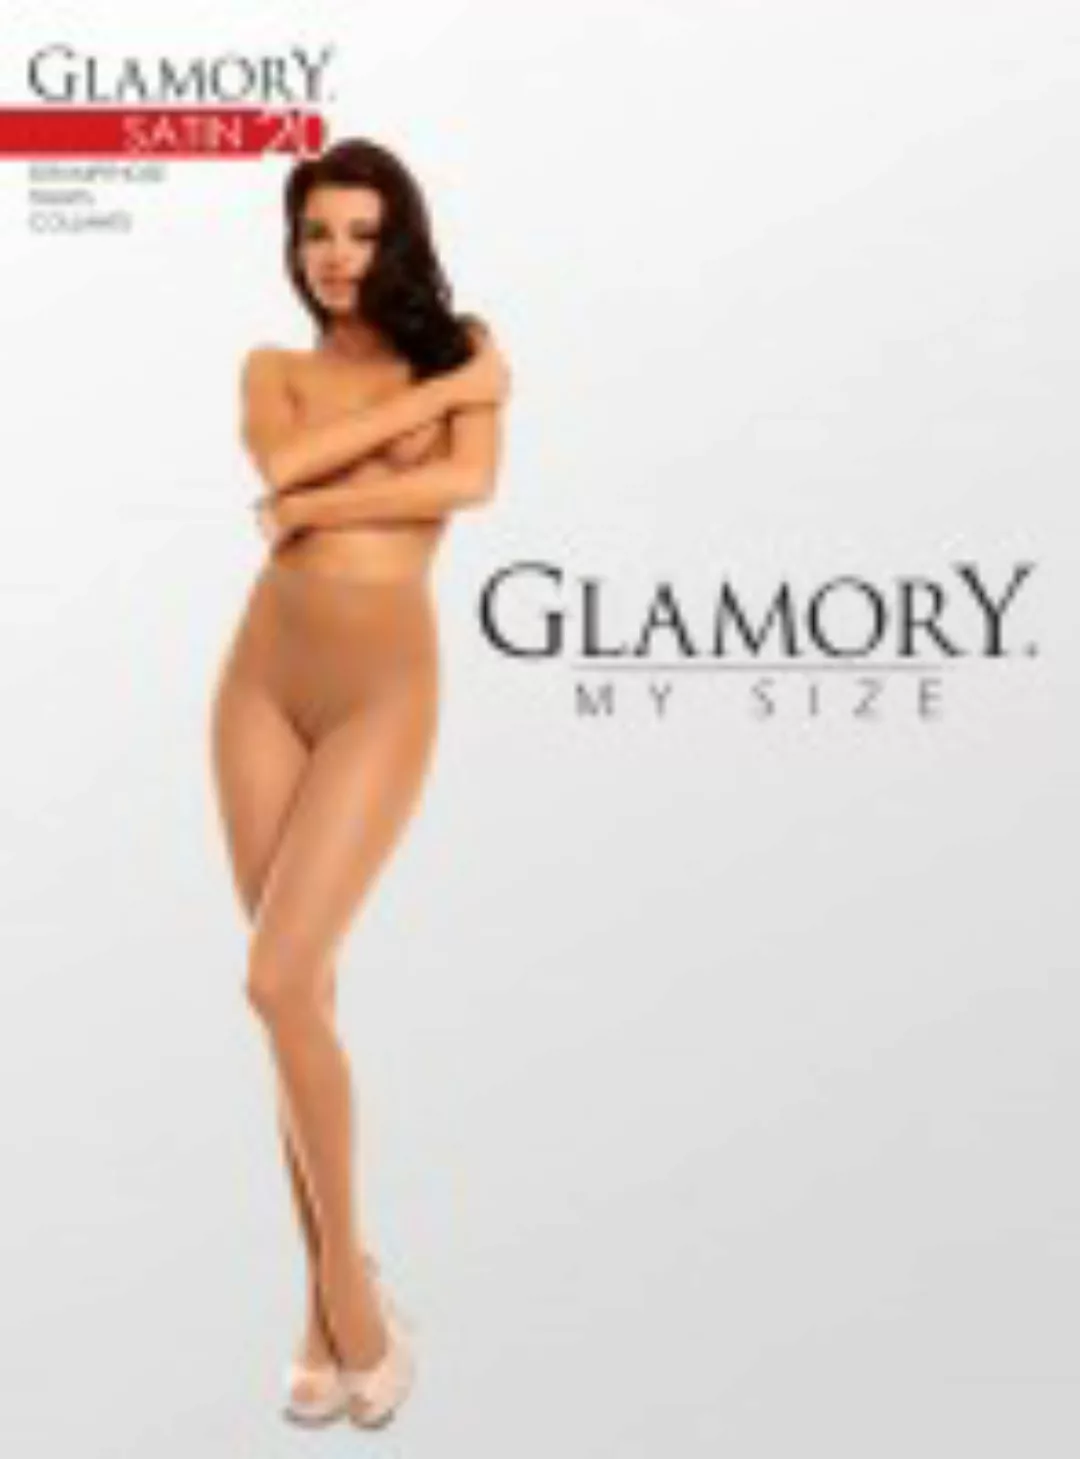 Glamory Satin 20 Strumpfhose (3er Pack) günstig online kaufen